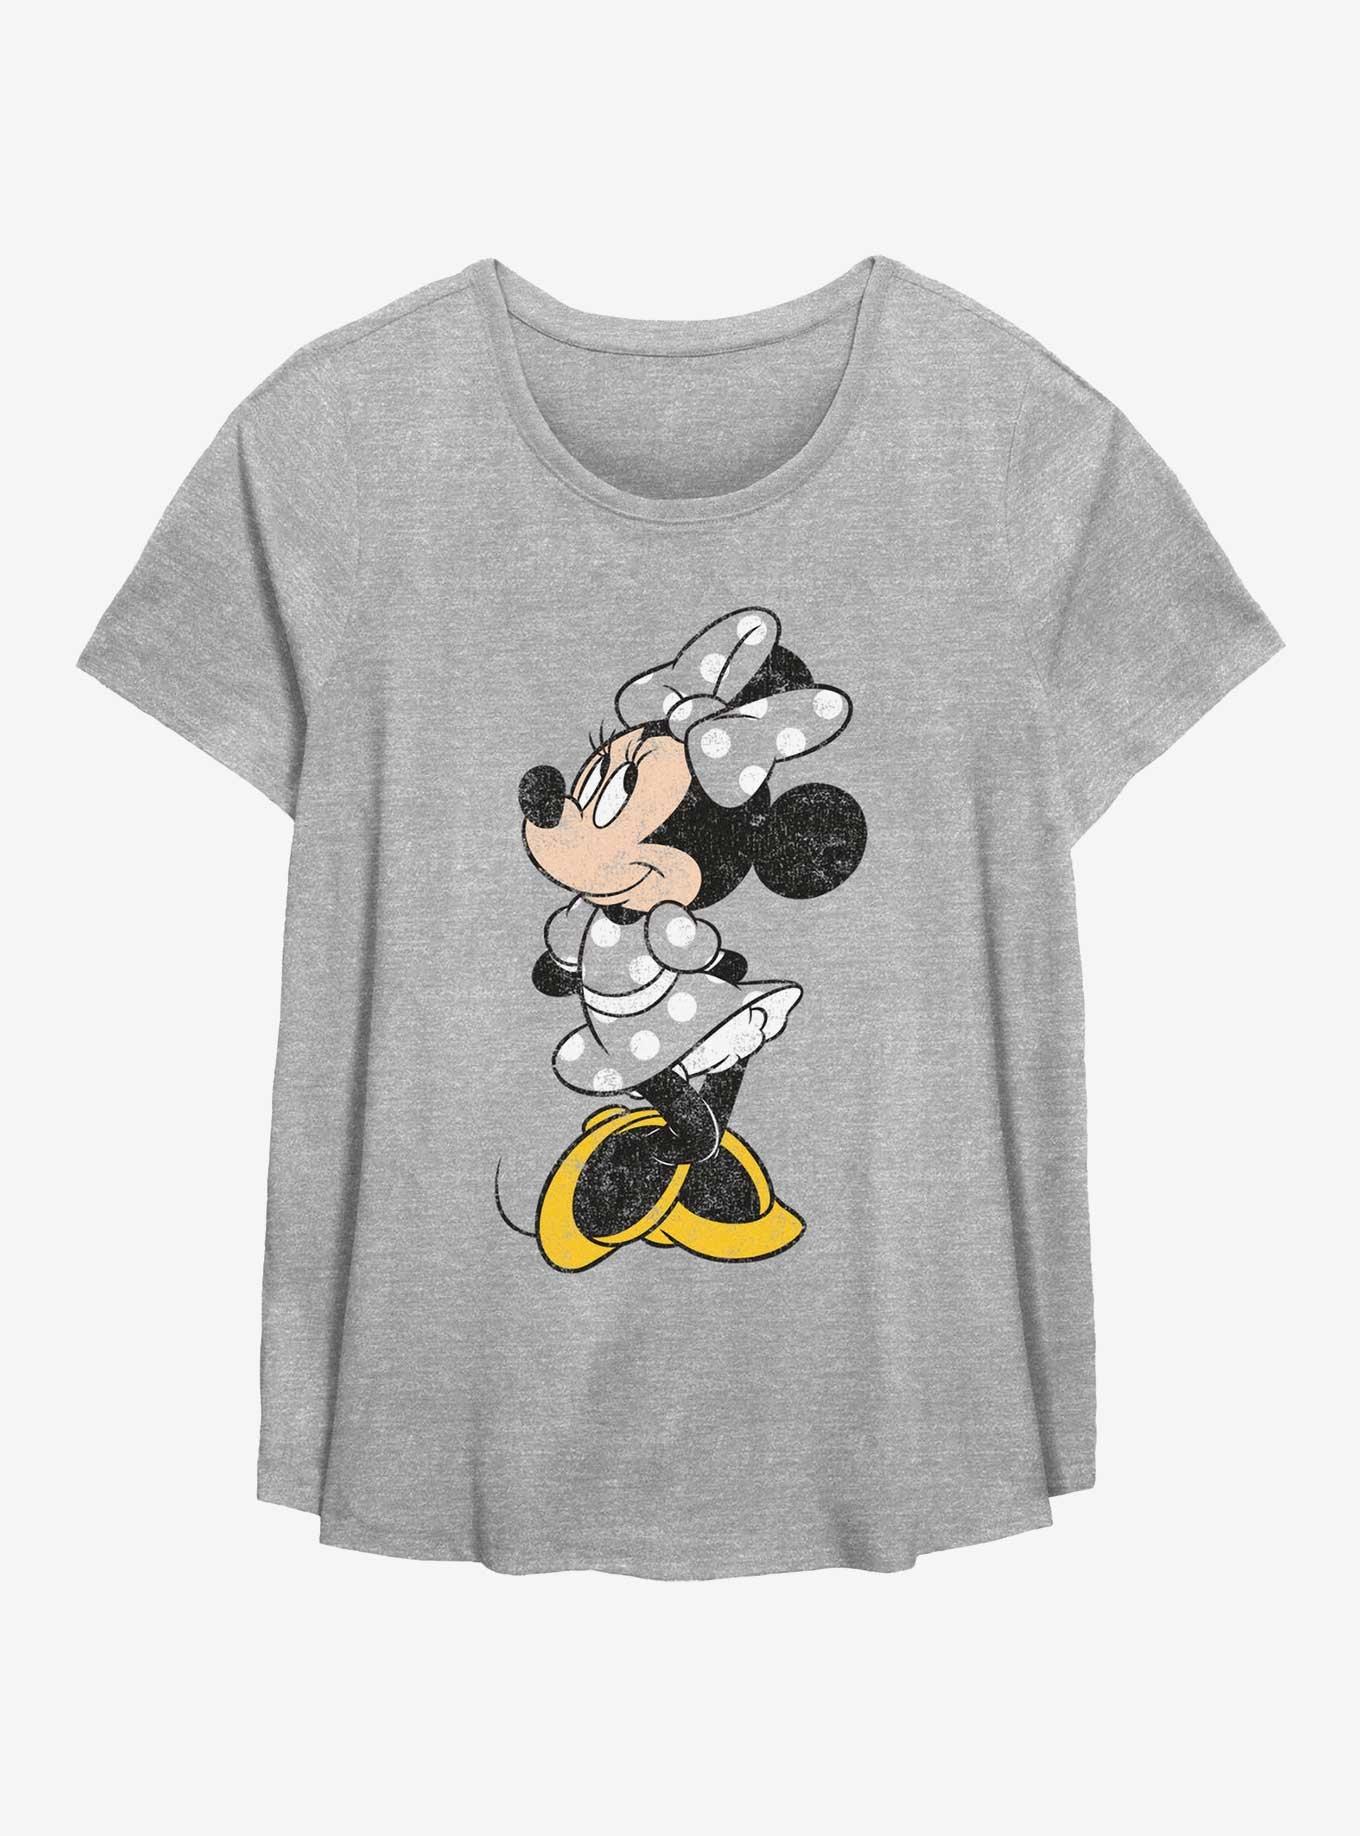 Disney Minnie Mouse Modern Vintage Girls T-Shirt Plus